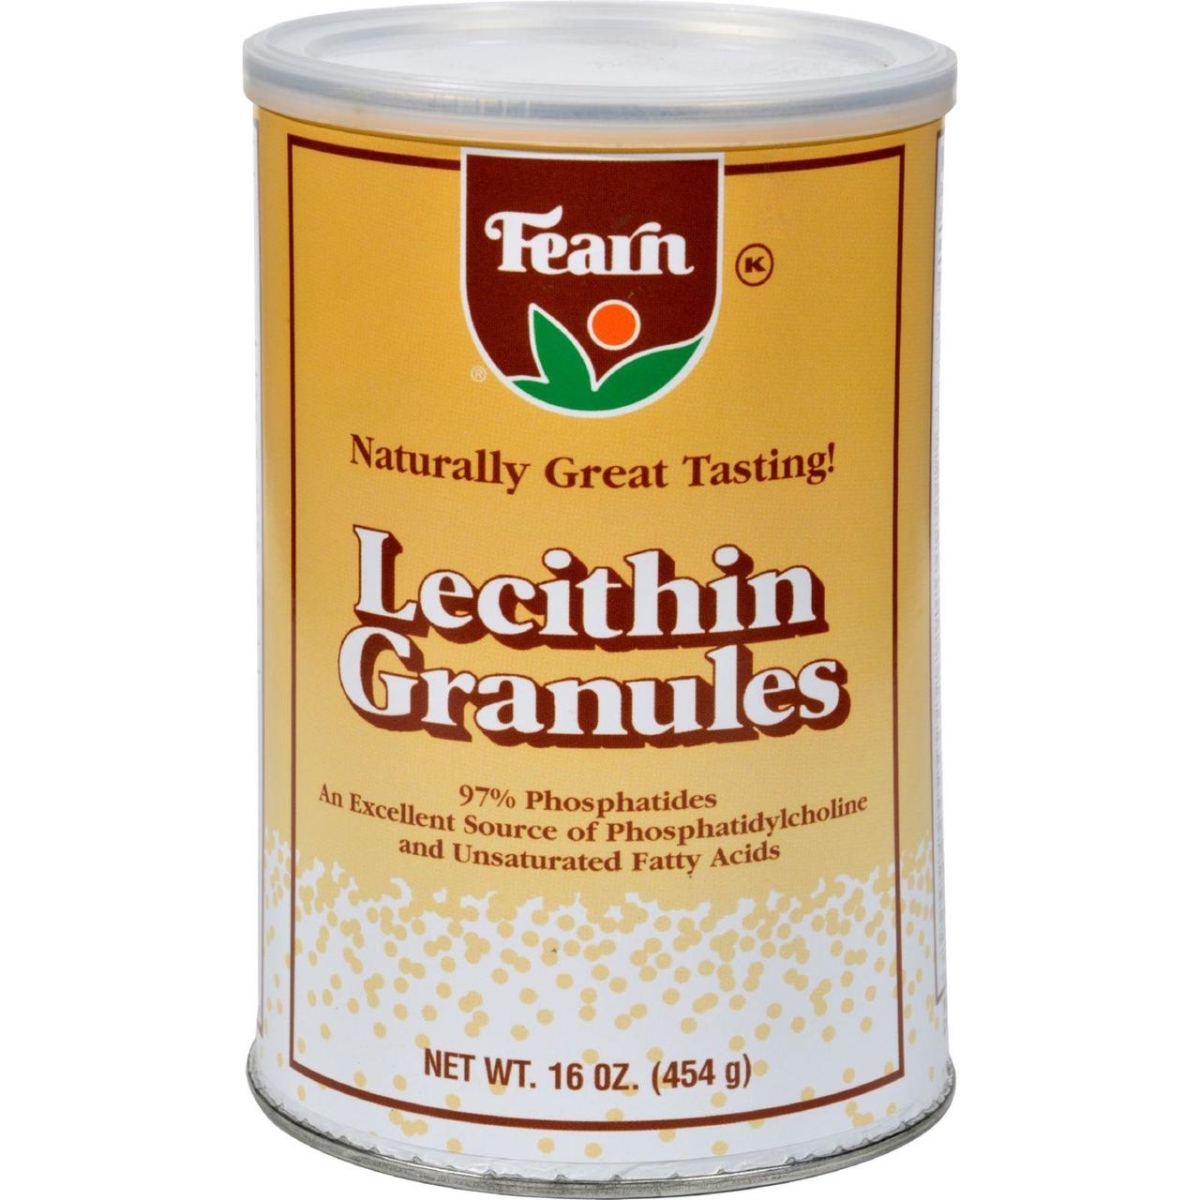 Hg0614214 16 Oz Lecithin Granules